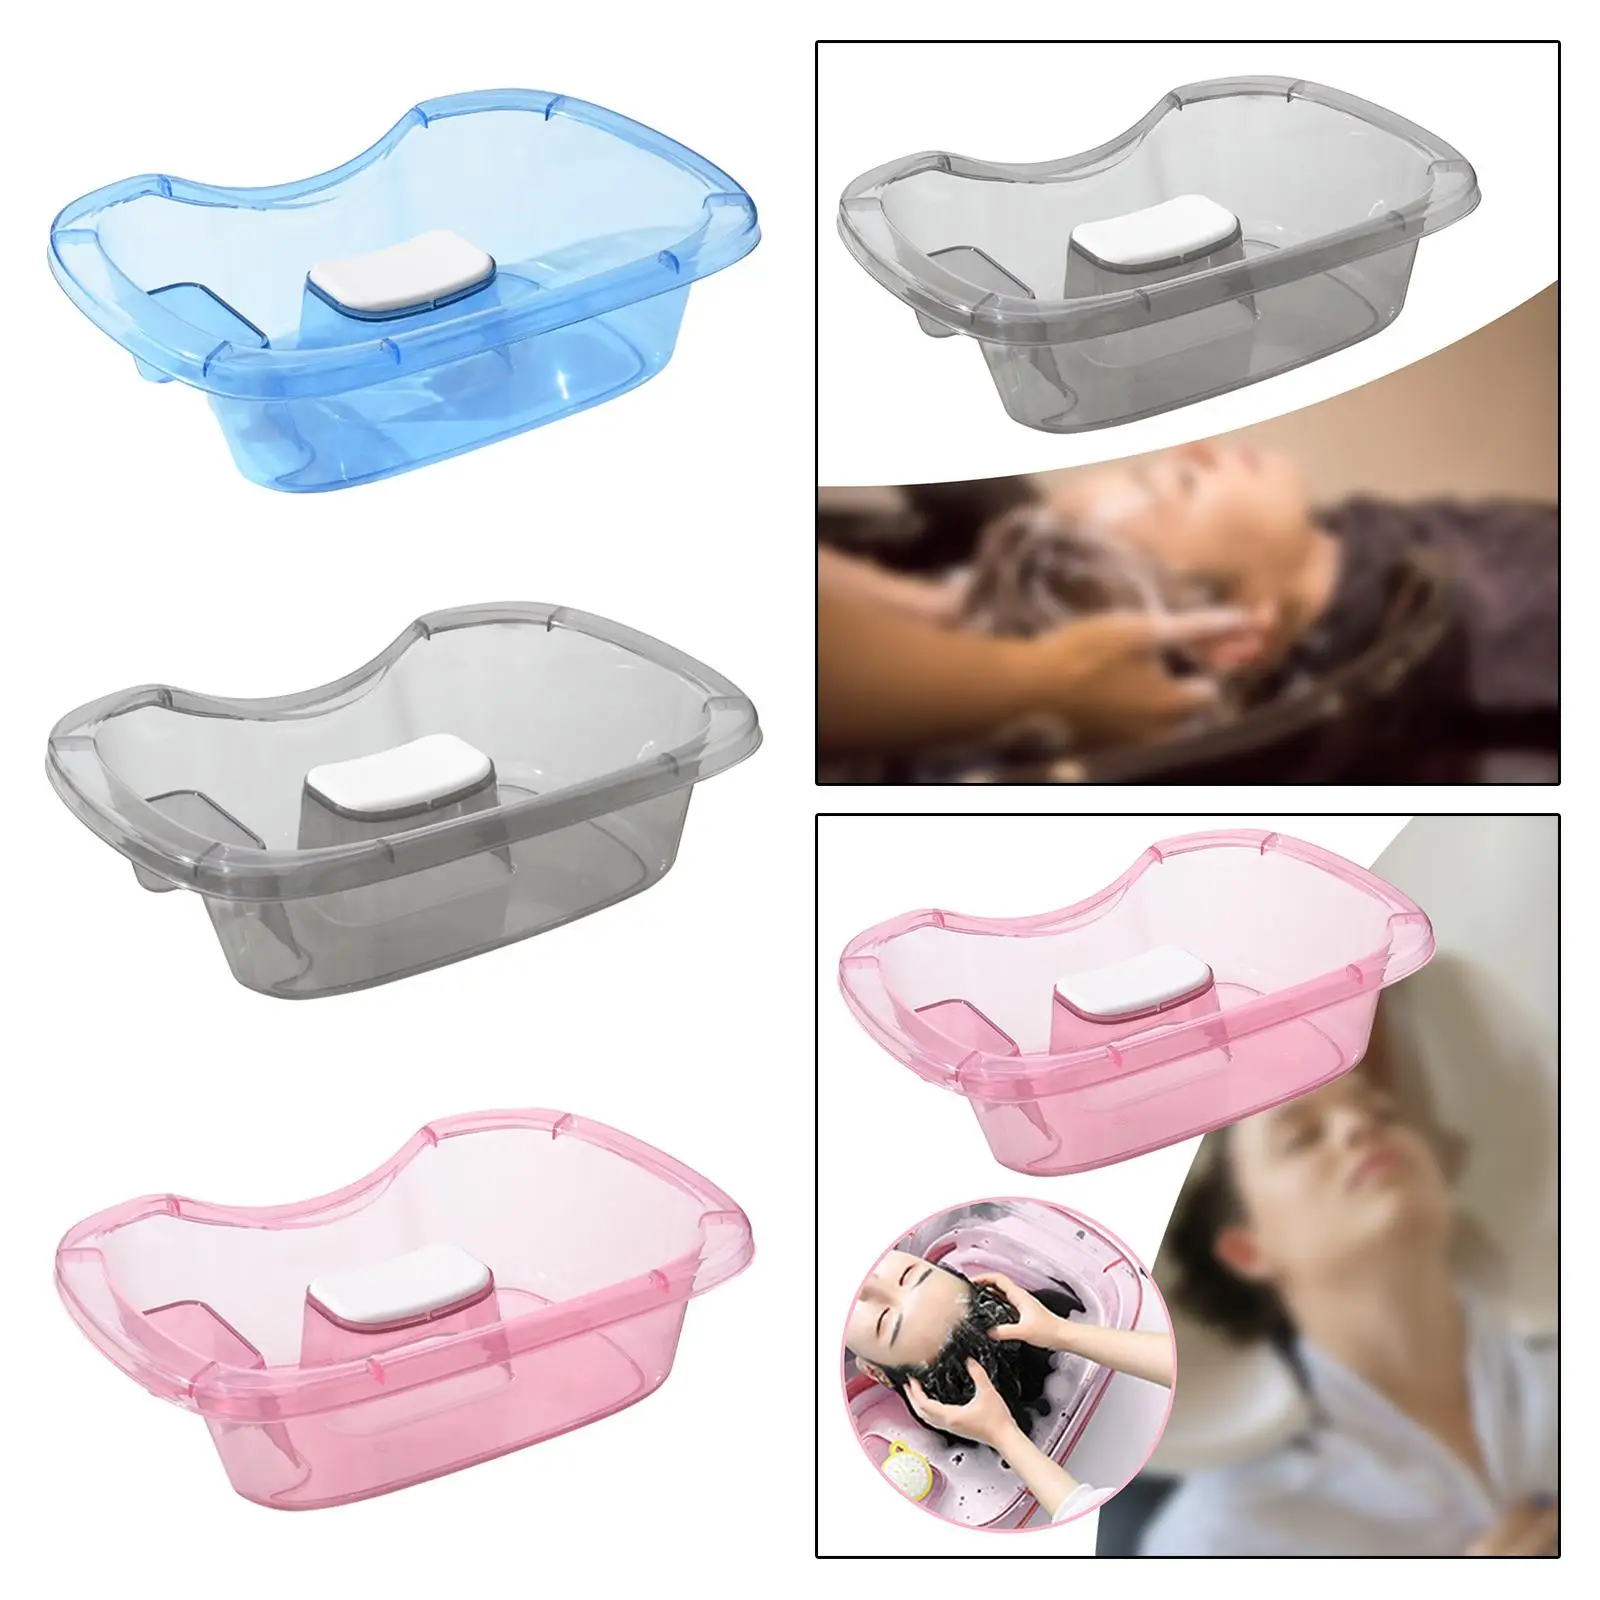 Shampoo Basin Lightweight Rinse Basin Portable Shampoo Bowl Mobile Shampoo Basin for Stylists Home Kids Disabled Bedridden